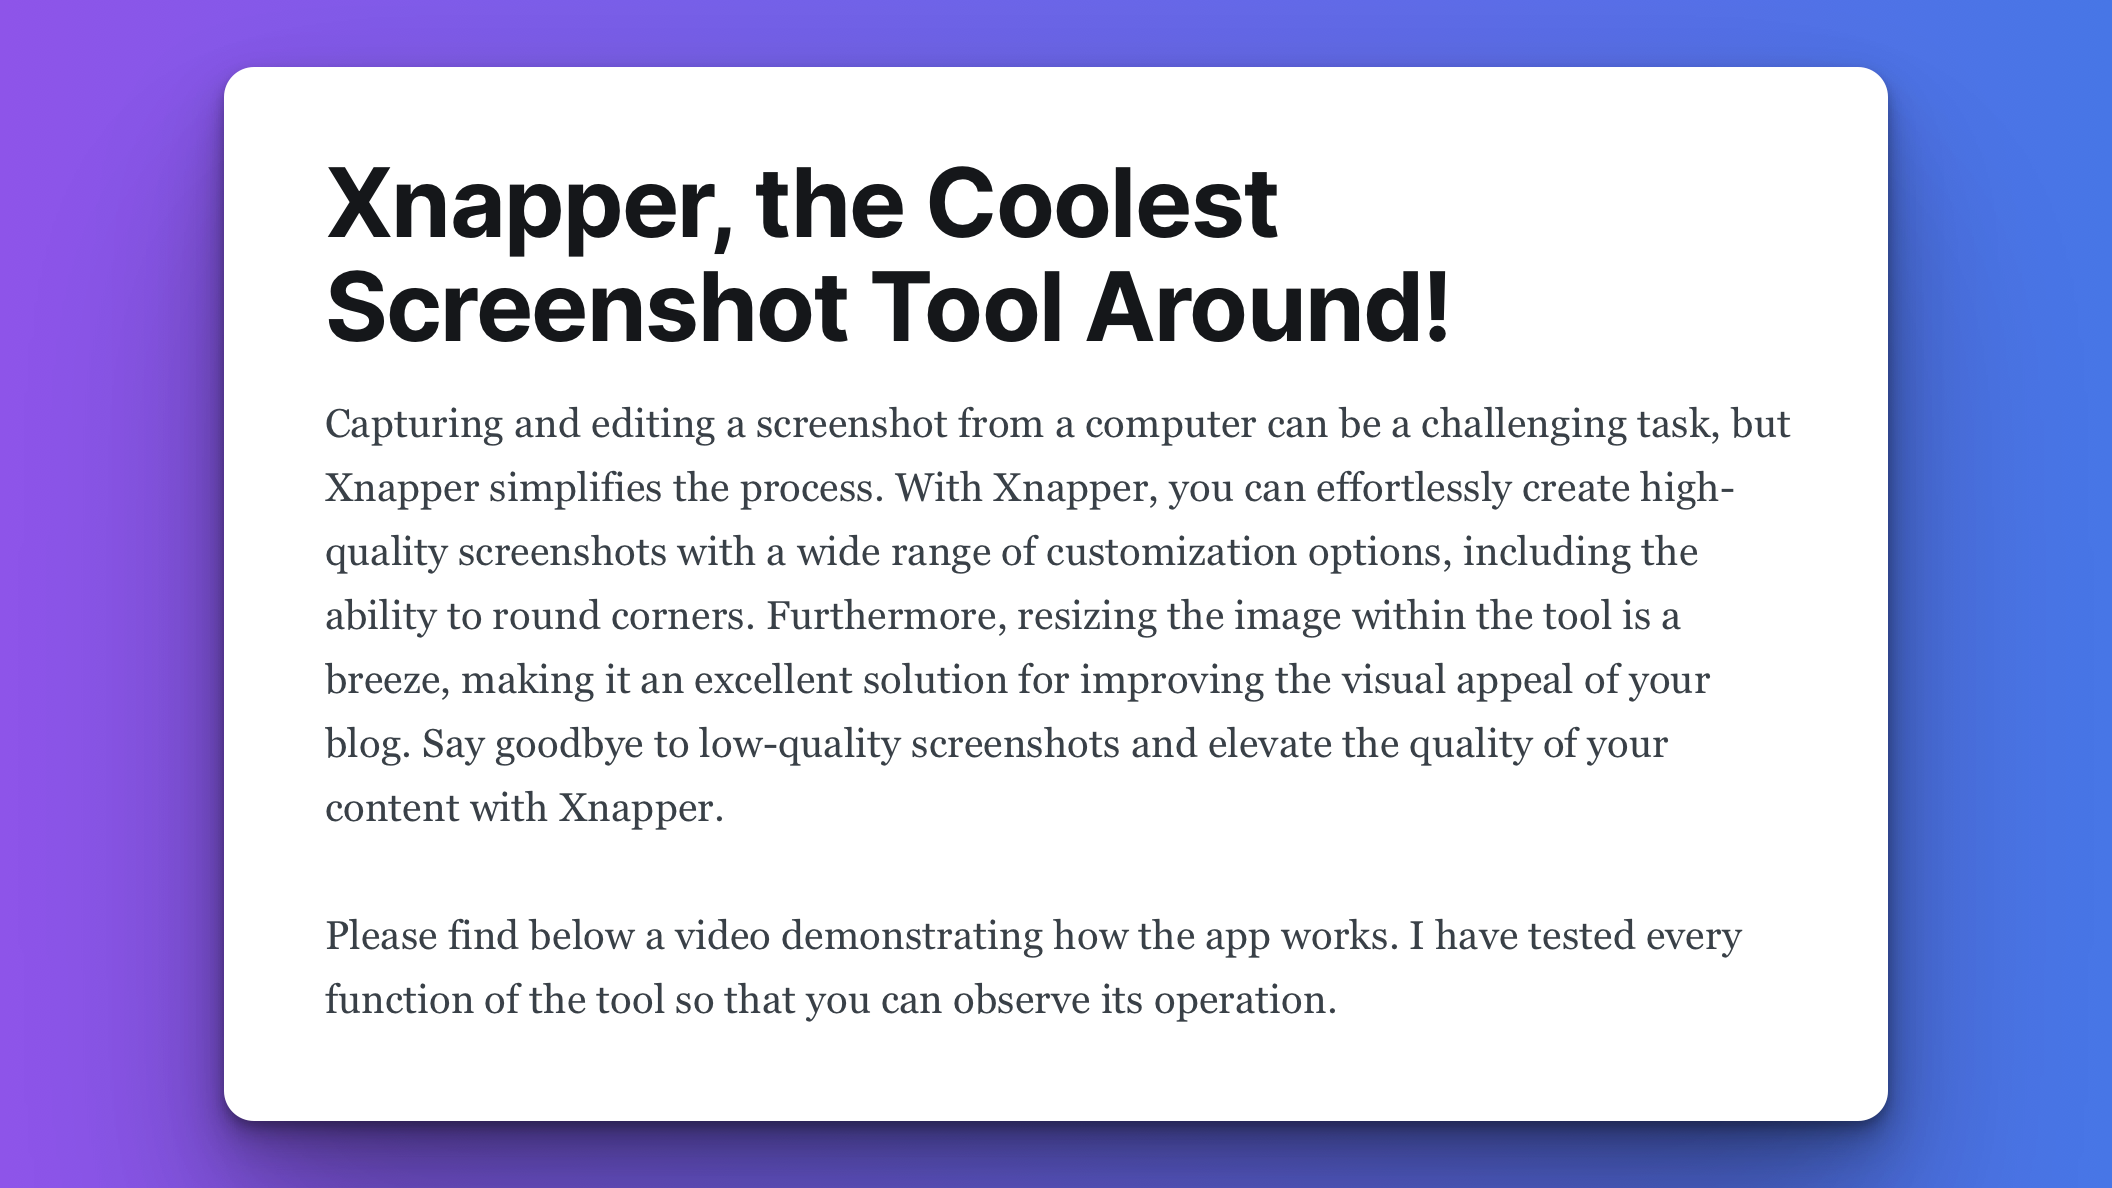 Xnapper, the Coolest Screenshot Tool Around!